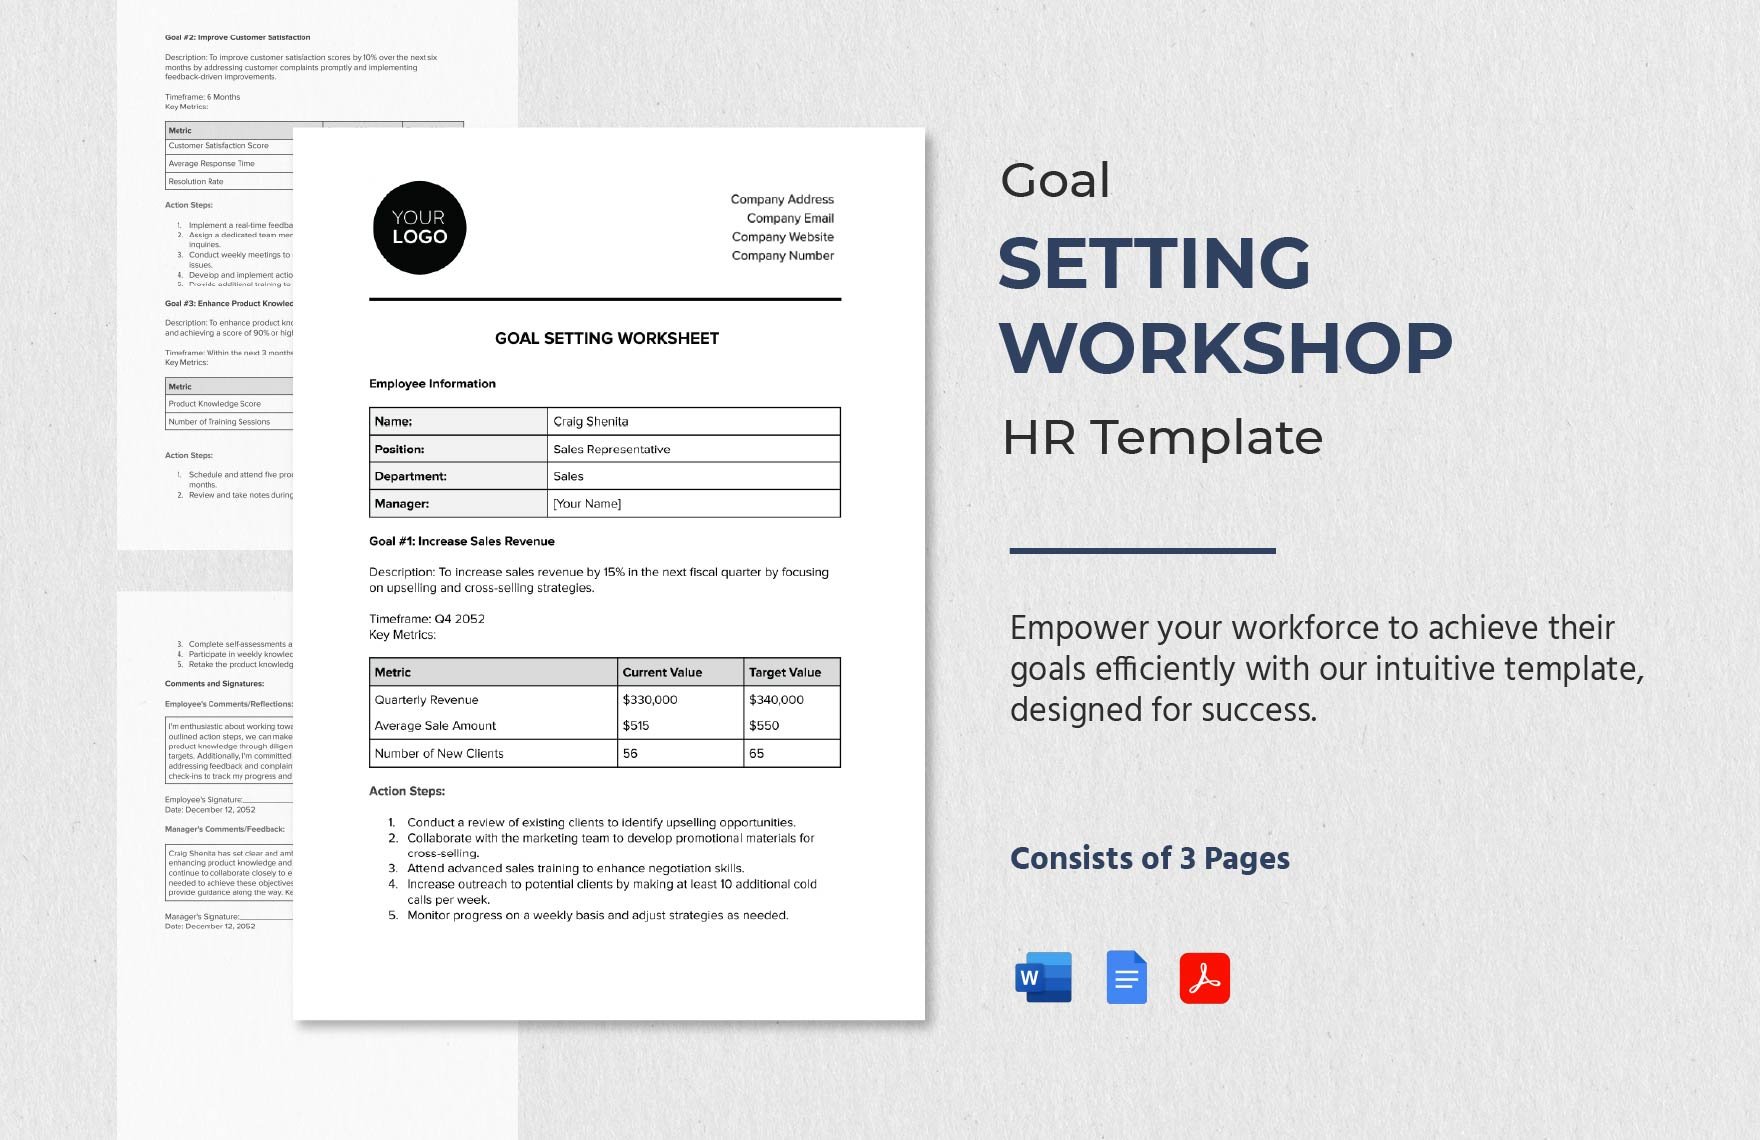 Goal Setting Worksheet HR Template in Word, Google Docs, PDF